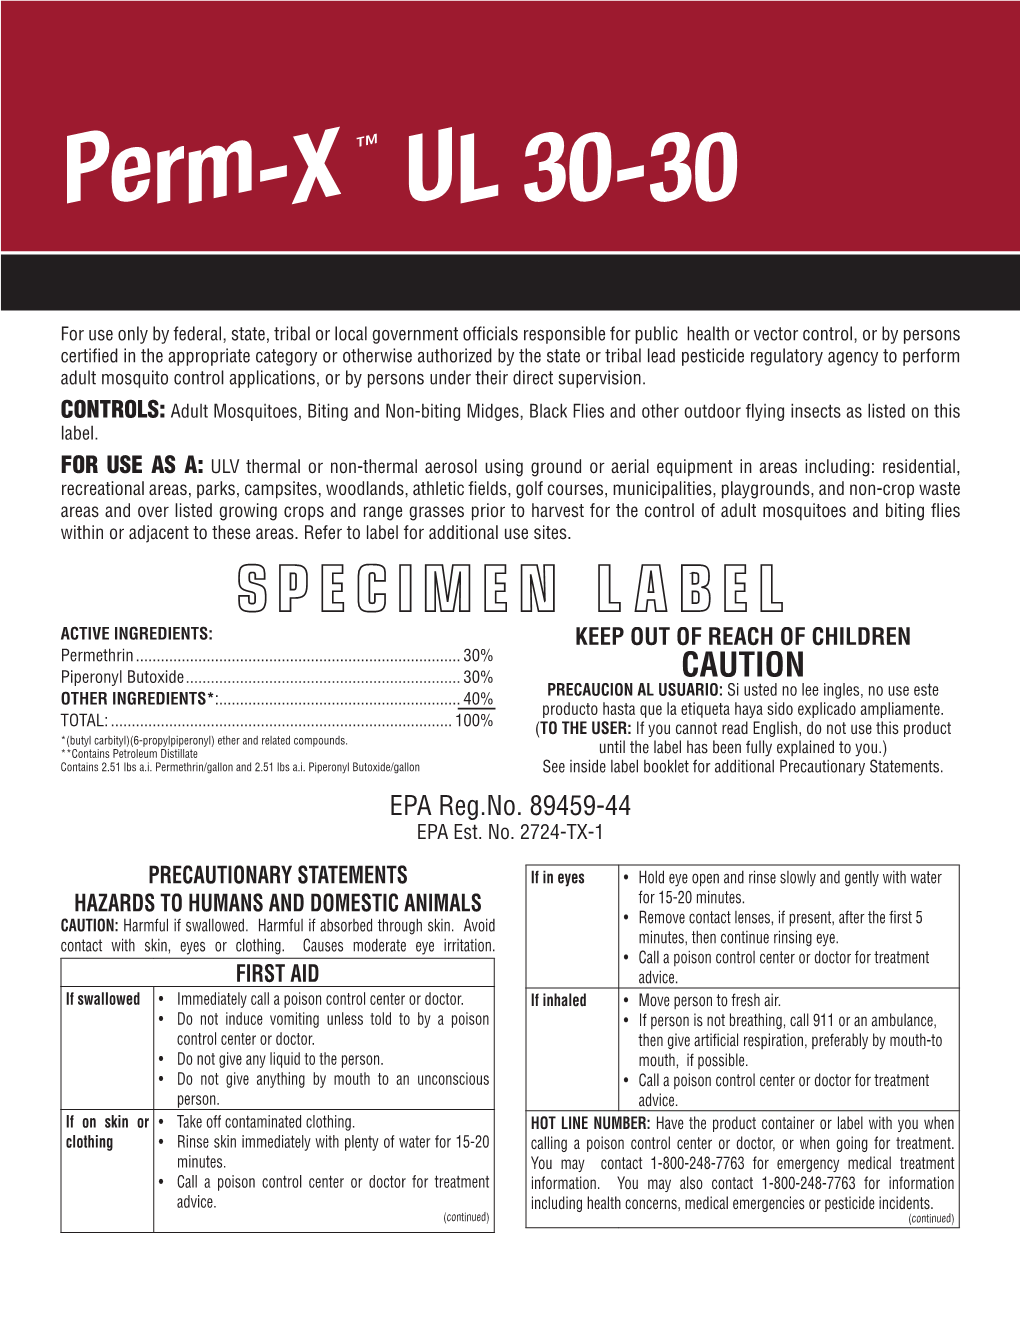 Perm-X UL 30-30 Label